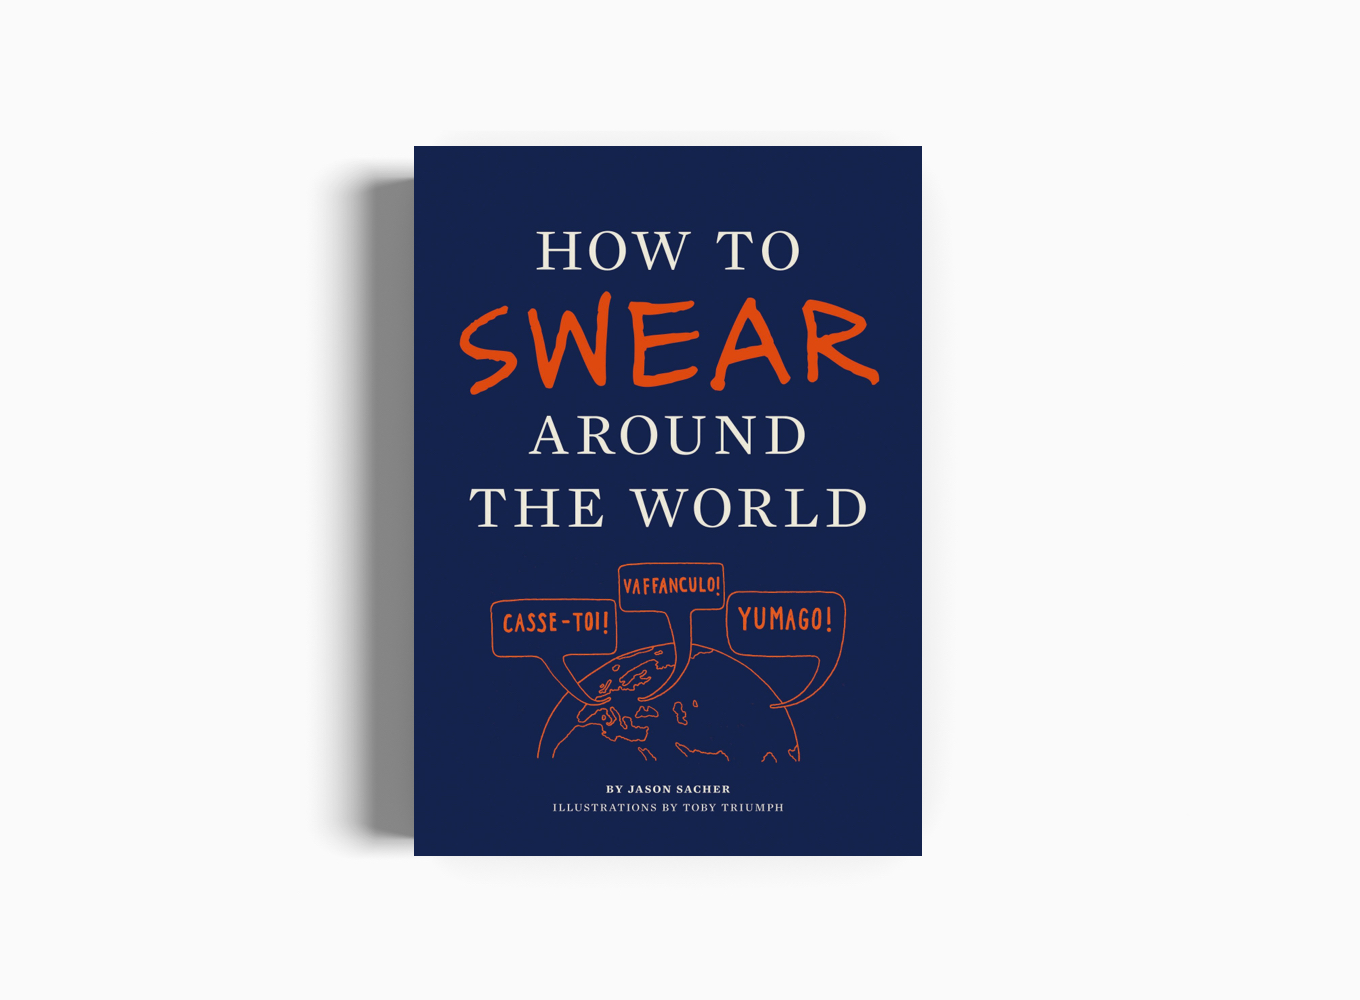 HOW TO SWEAR AROUND THE WORLD